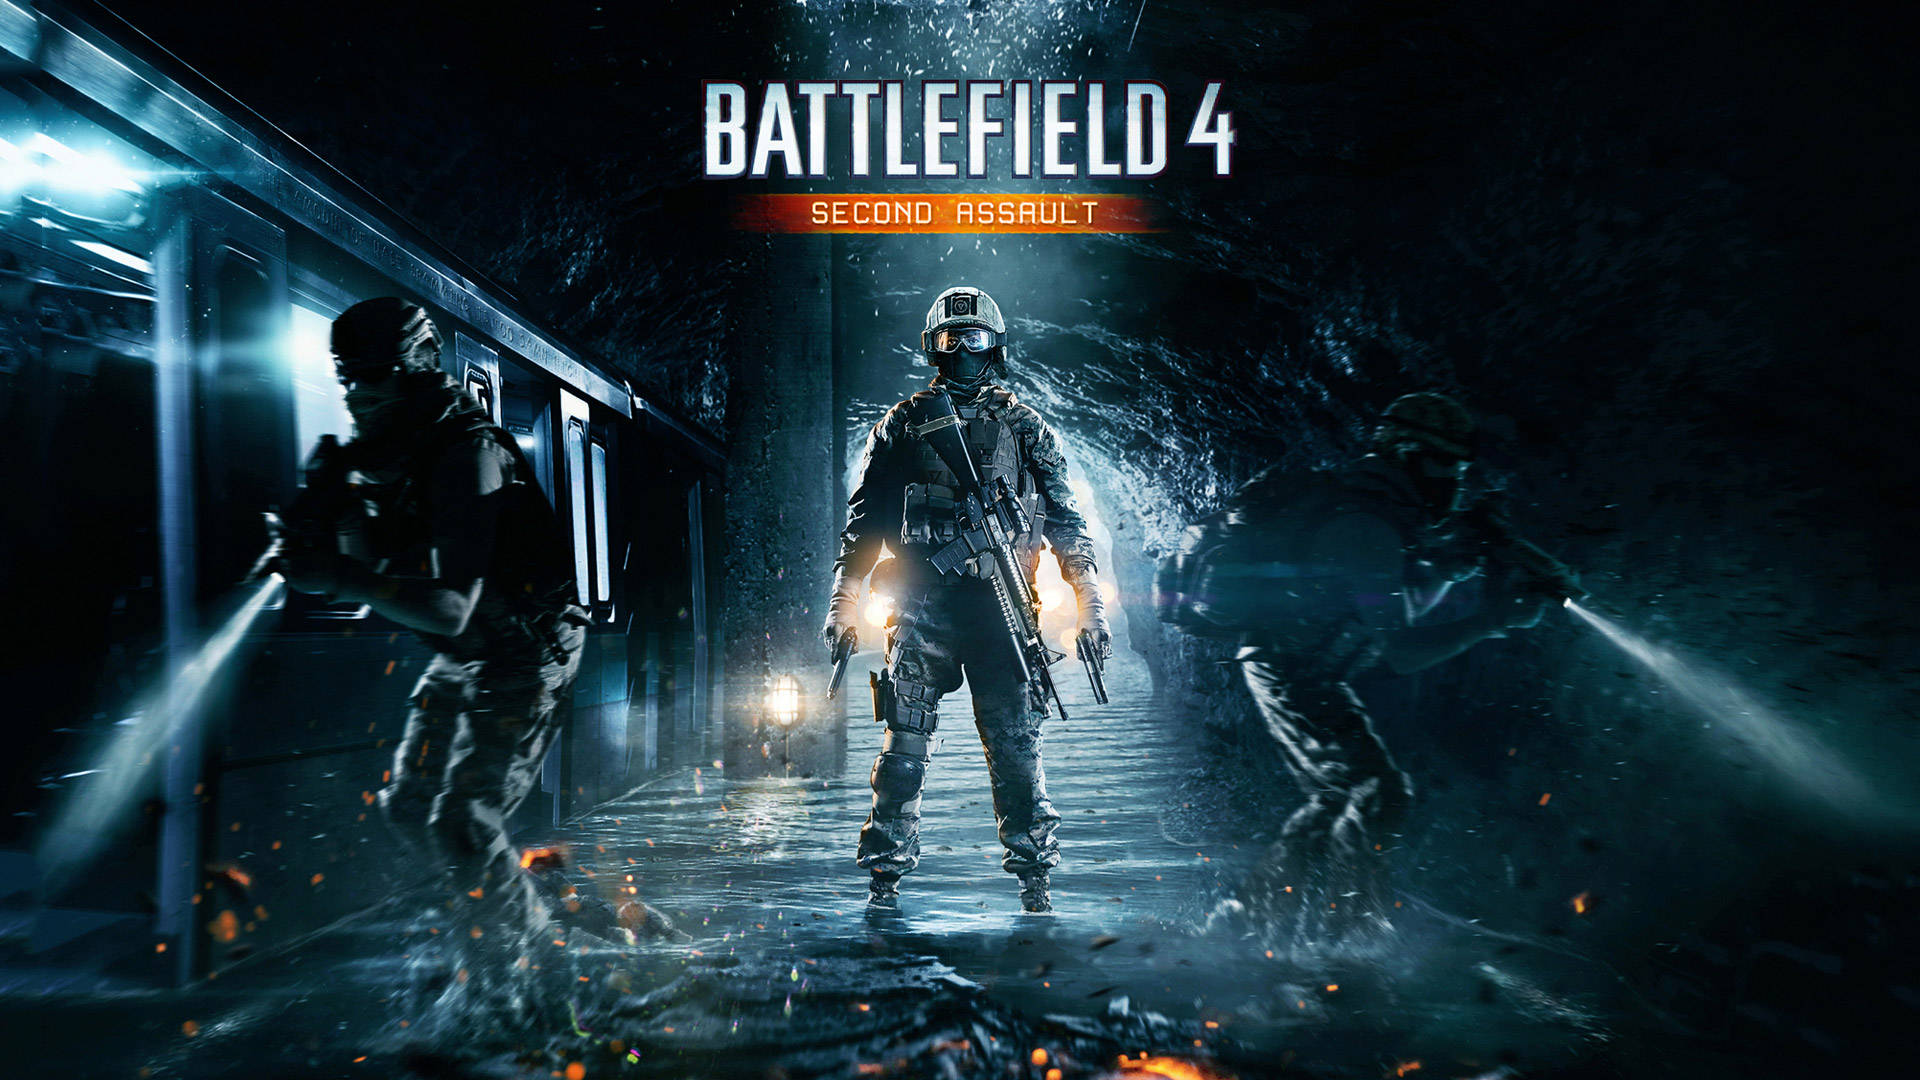 Cryptic Battlefield 4 Promo